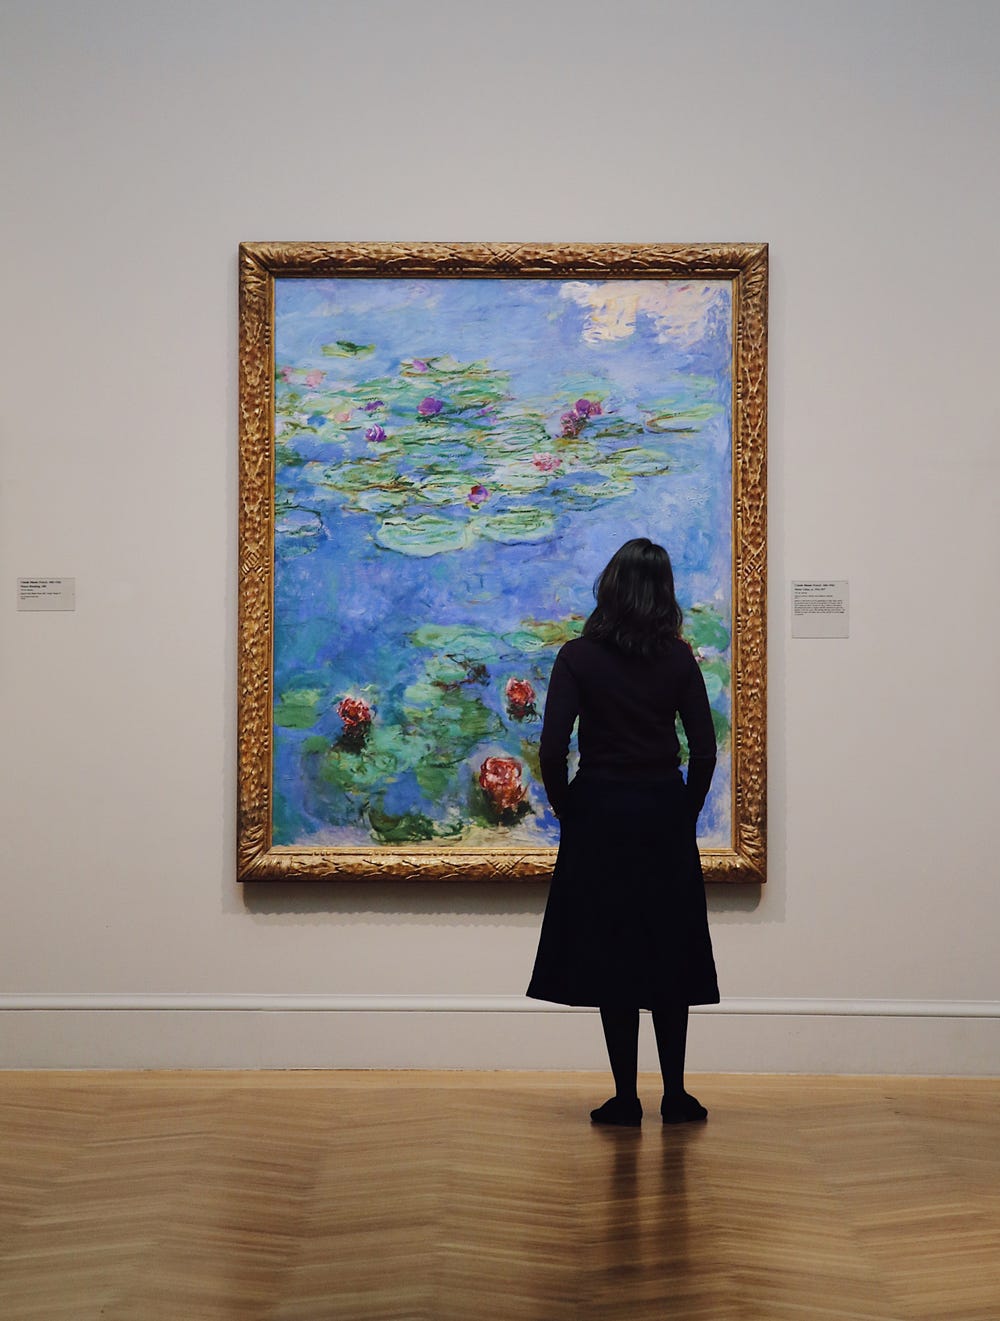 Claude Monet, “Water Lilies," 1914–1917